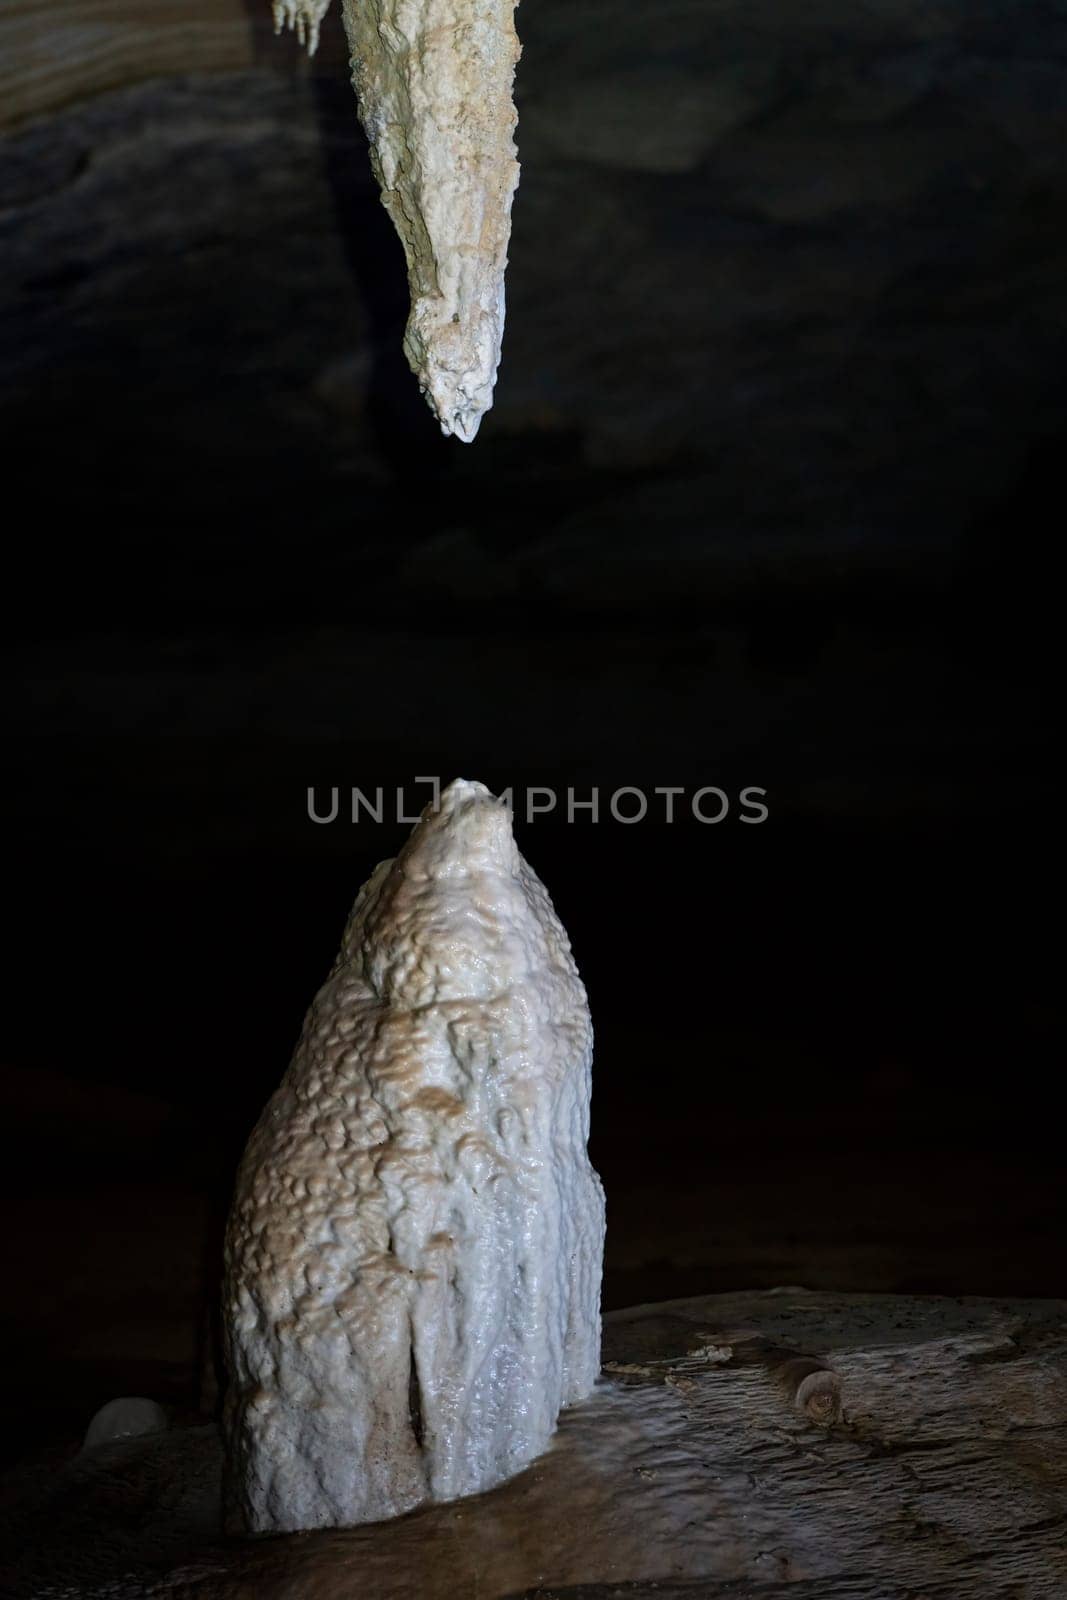 Stalactite and Stalagmite Formation in Dark Cave by FerradalFCG